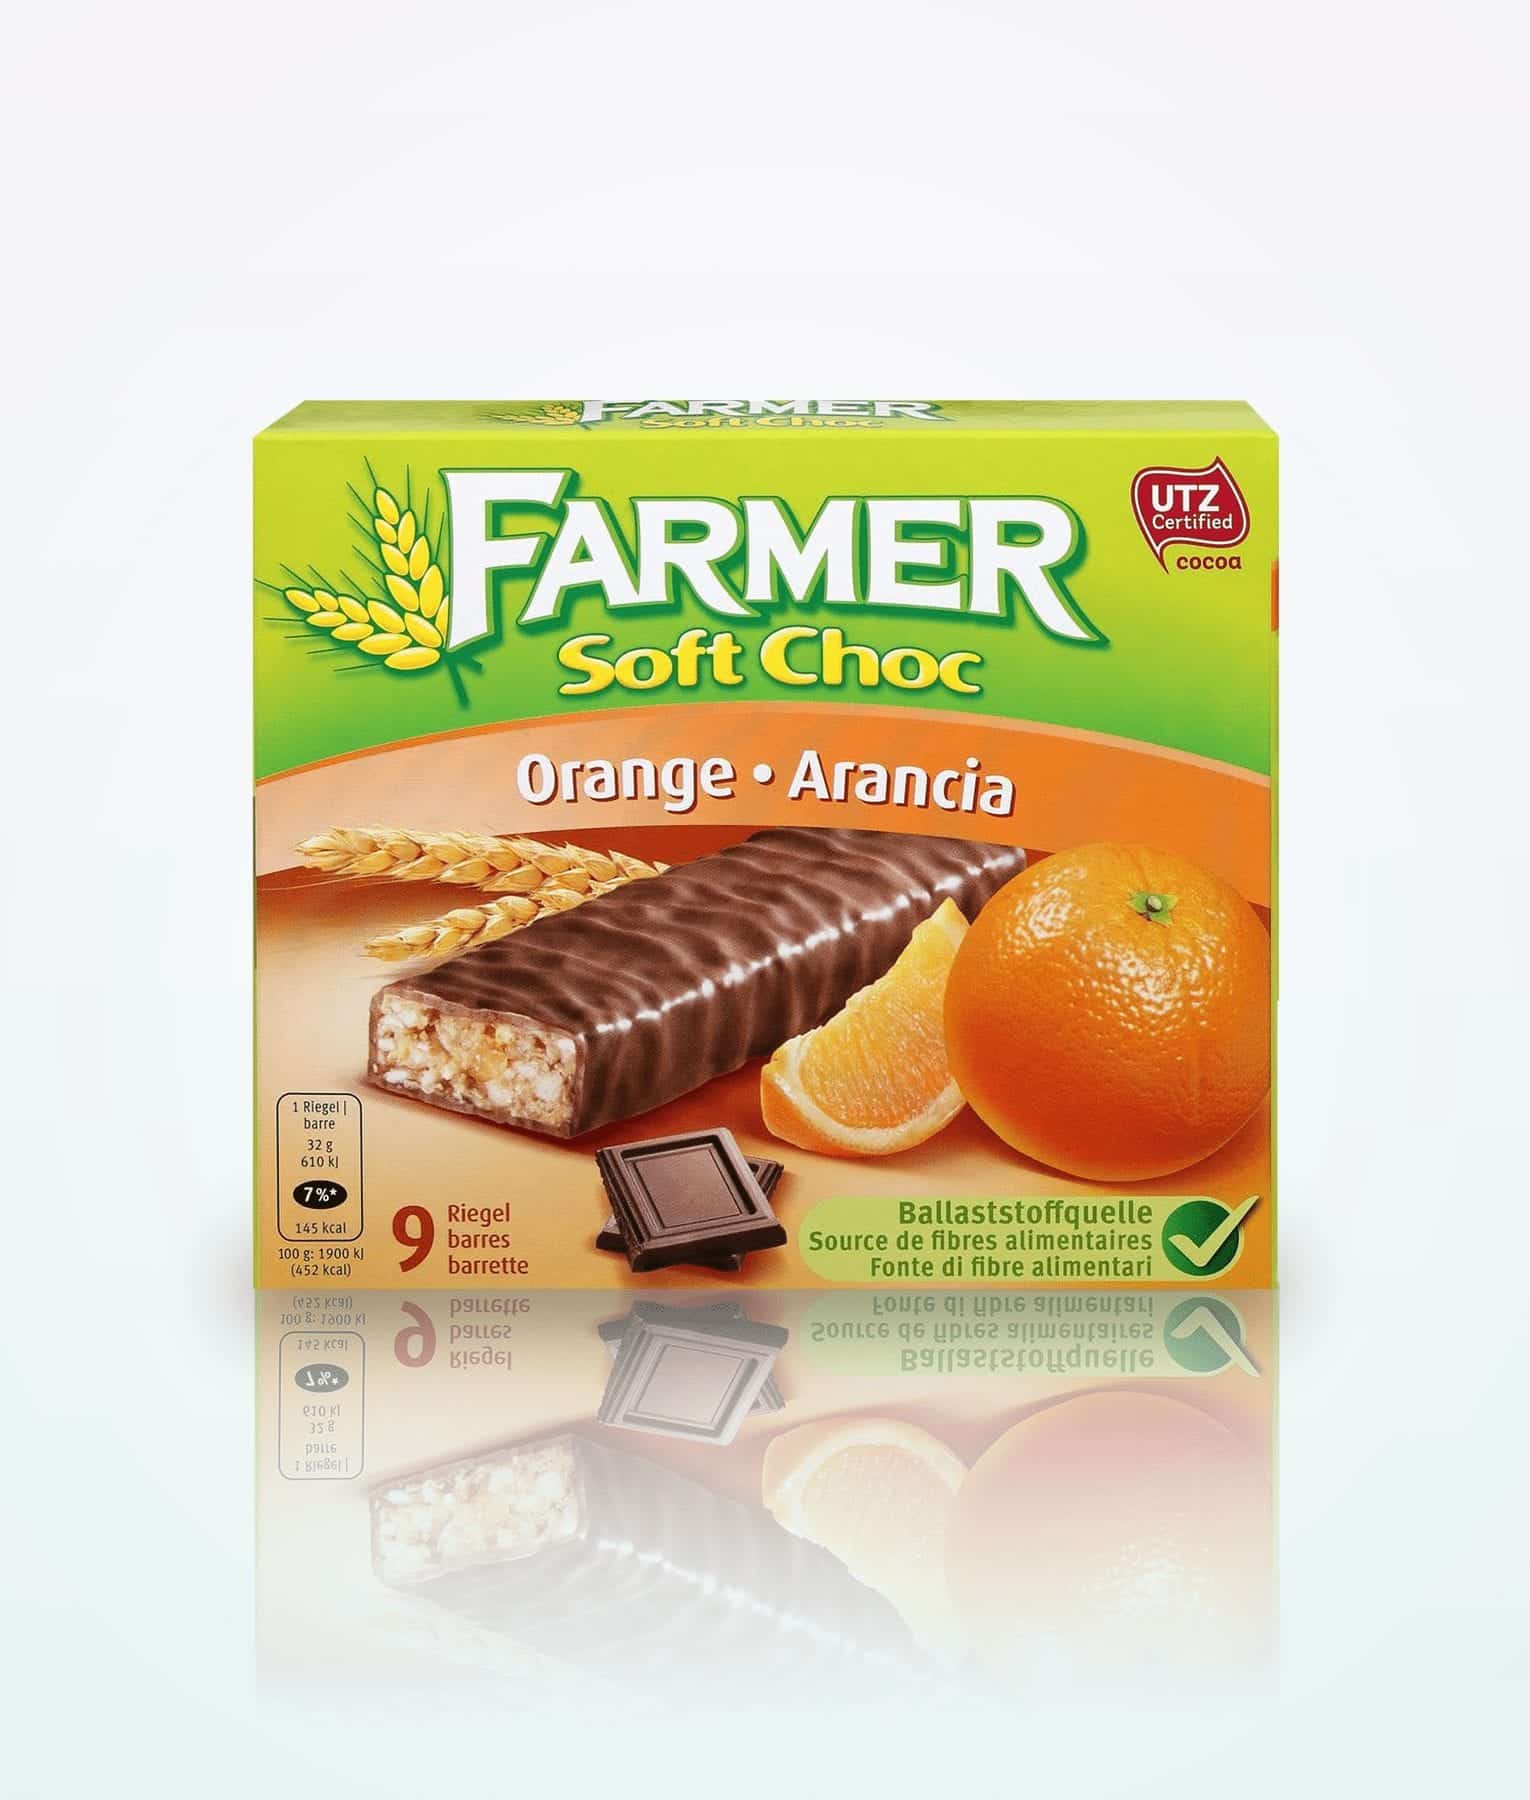 Farmer 9 Soft Choc con barras de naranja 290g.jpg